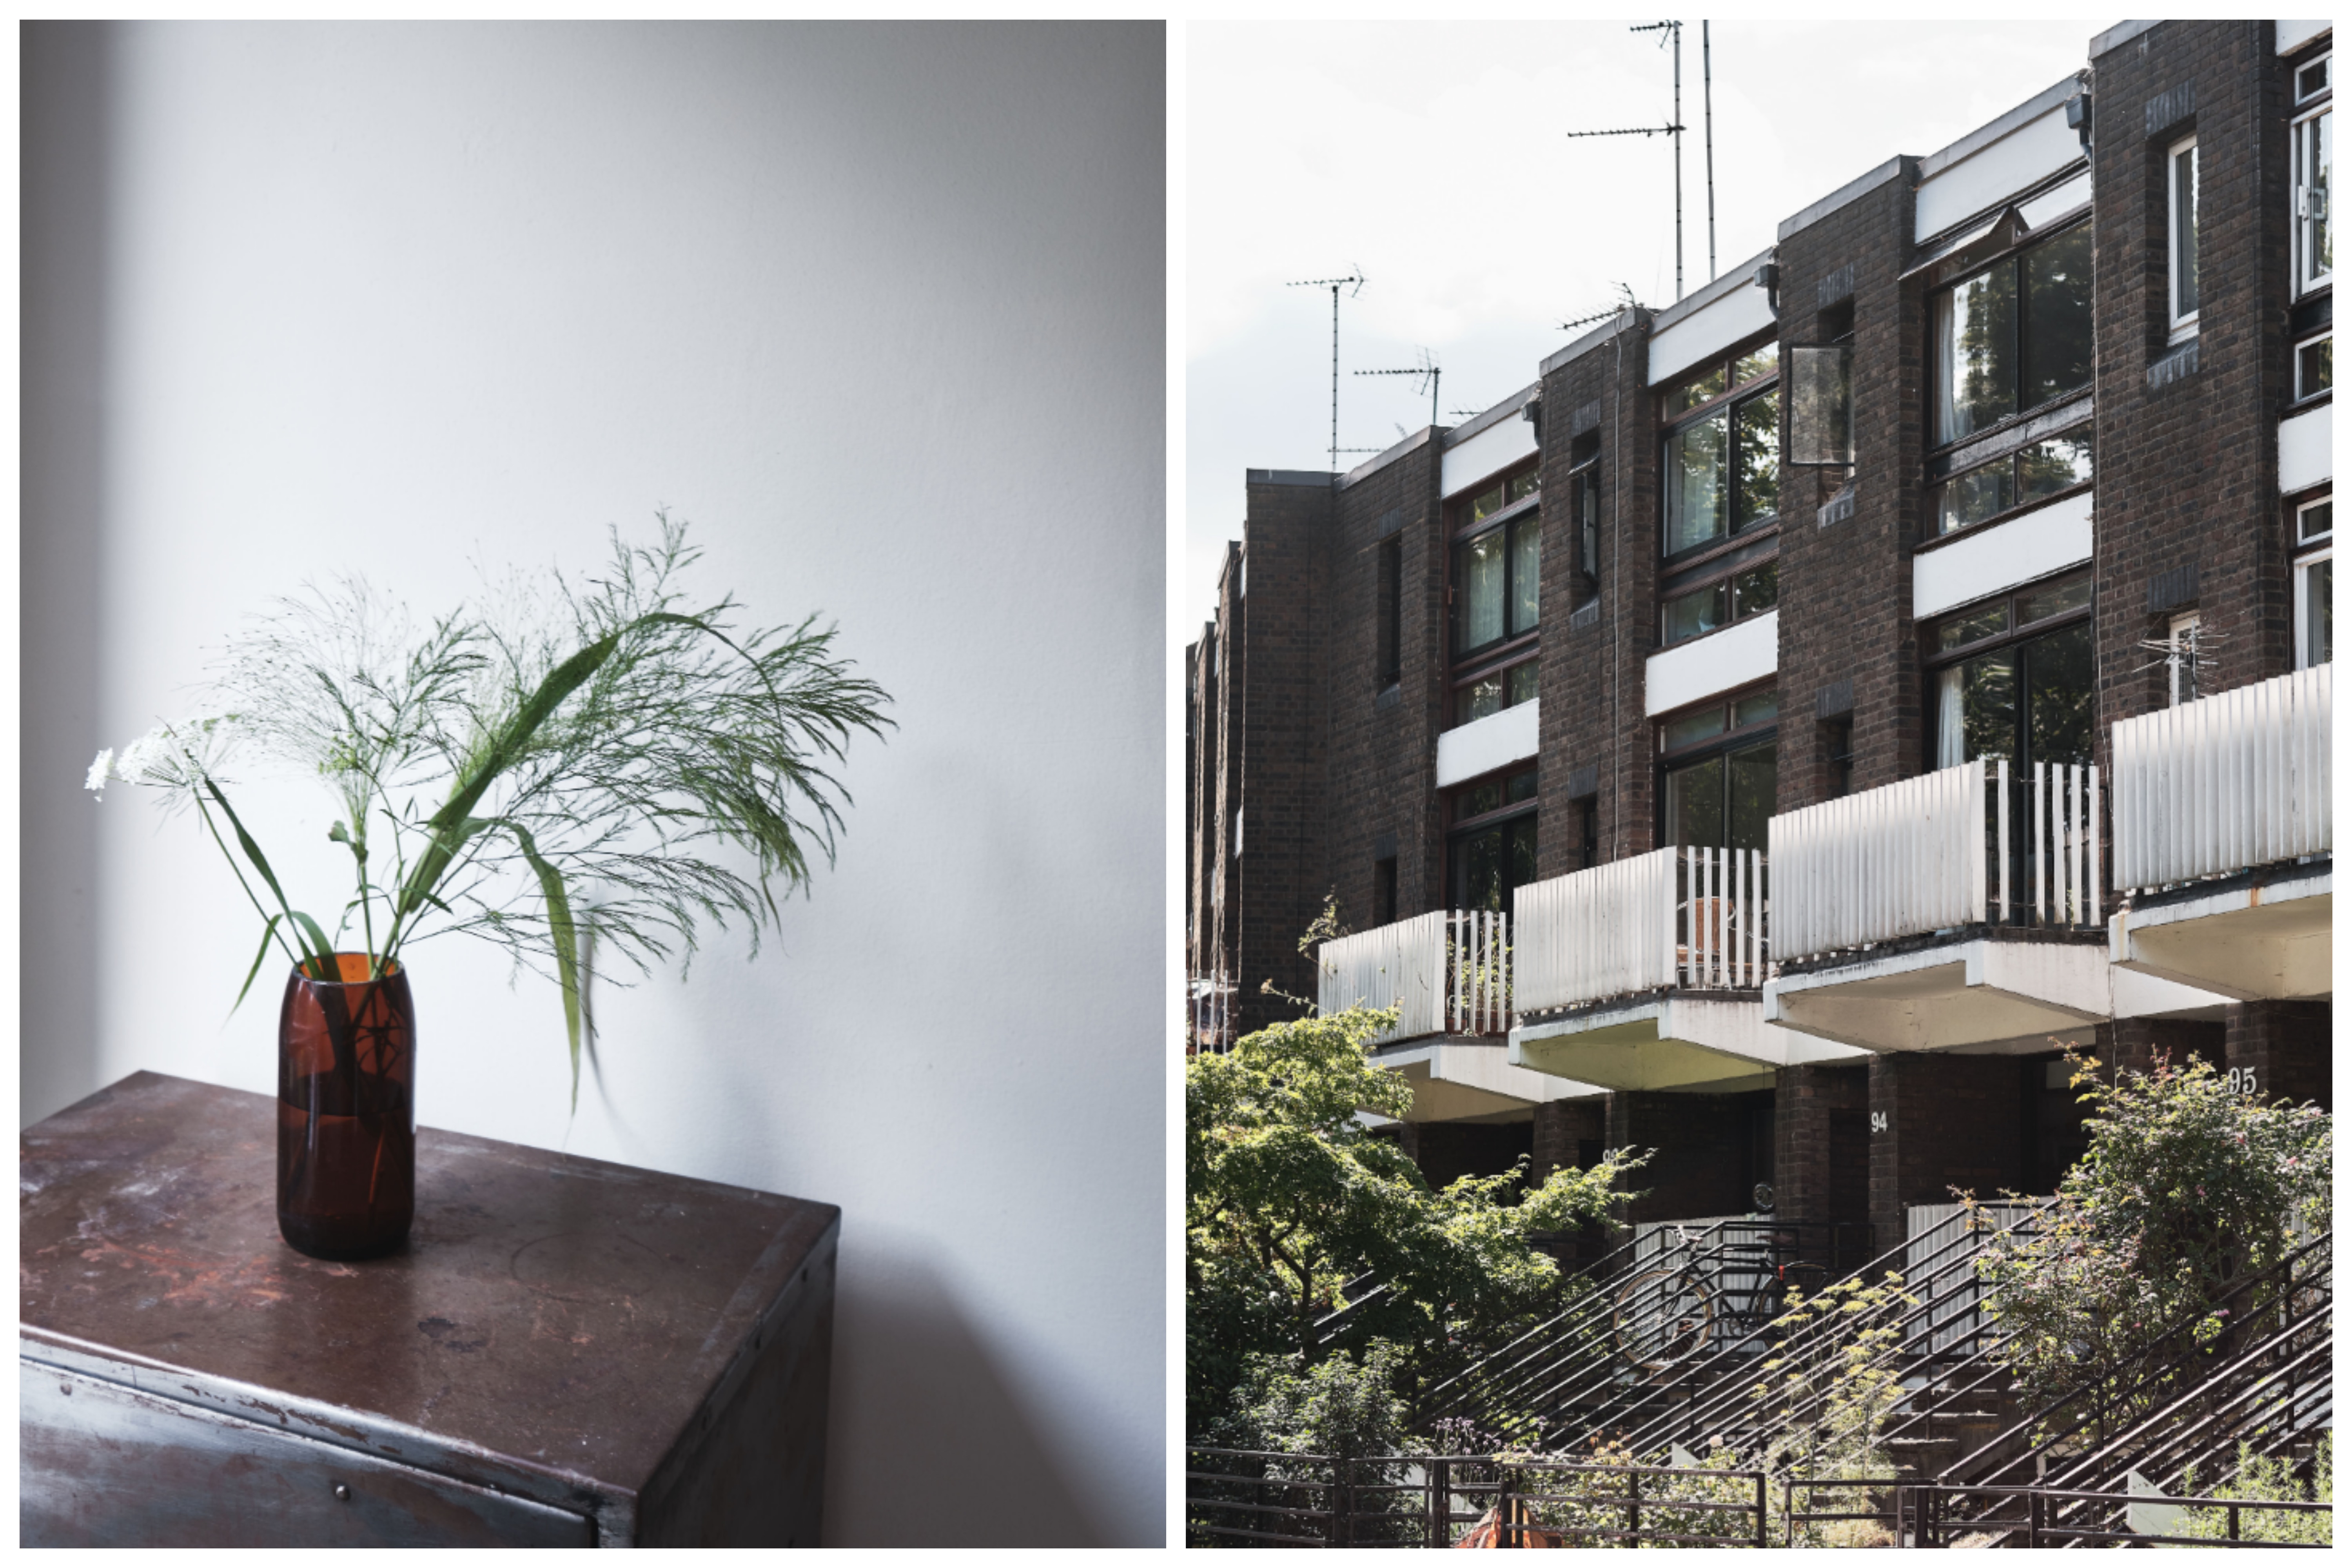 Aucoot - Gore Road - John Spence and Partners - Gordon Shrigley Architects - shot by John McDavid